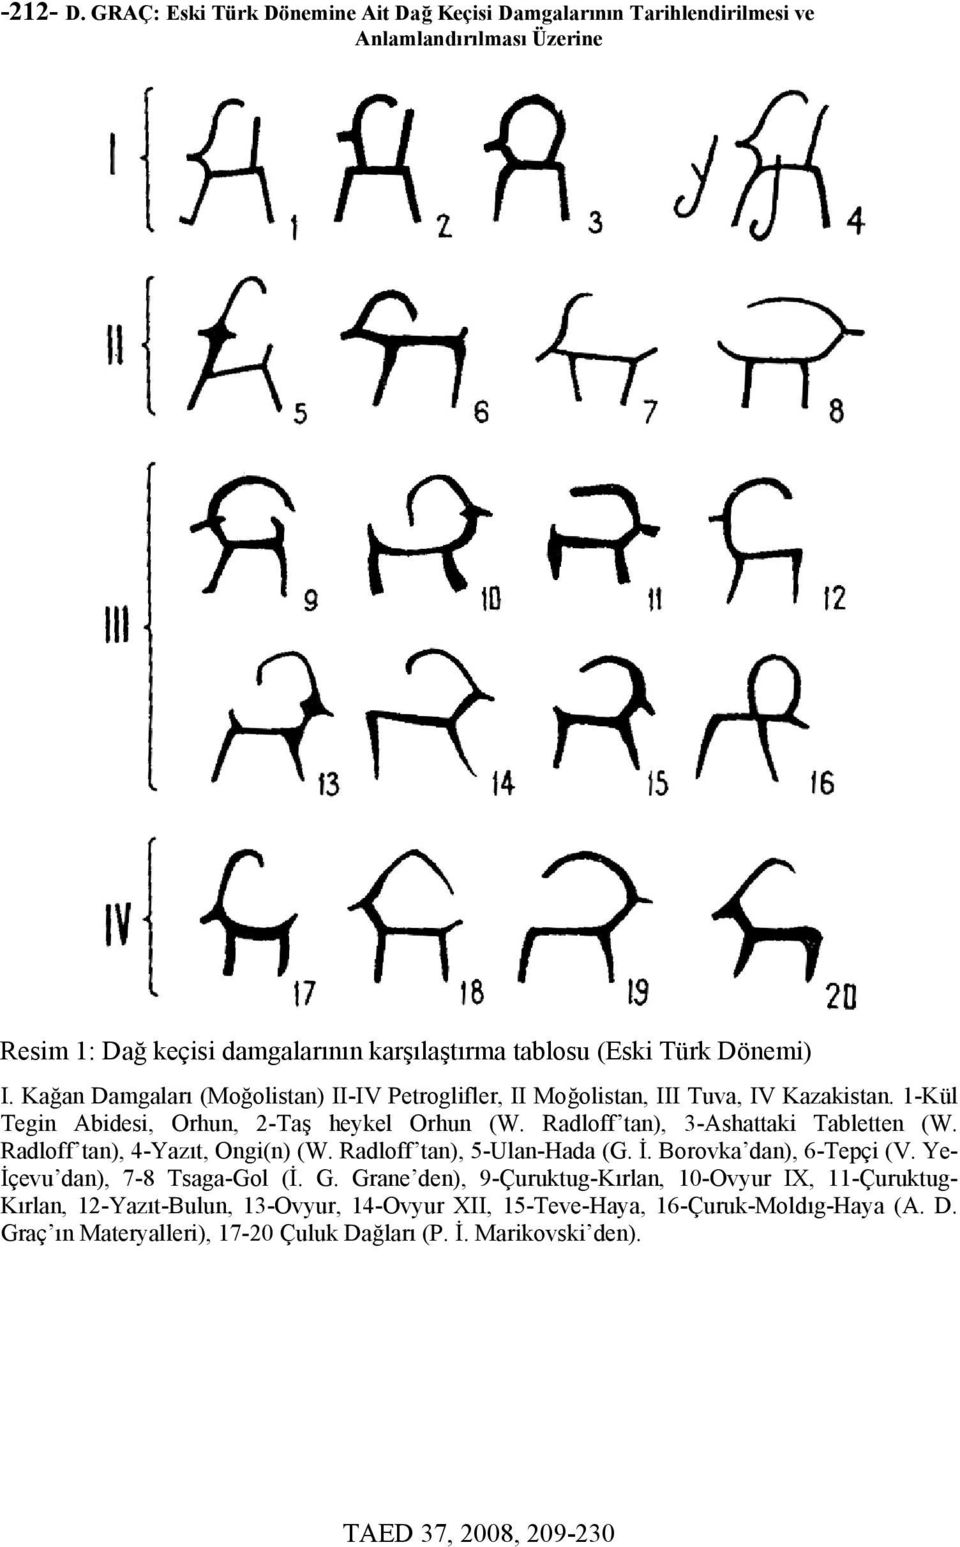 Kağan Damgaları (Moğolistan) II-IV Petroglifler, II Moğolistan, III Tuva, IV Kazakistan. 1-Kül Tegin Abidesi, Orhun, 2-Taş heykel Orhun (W.